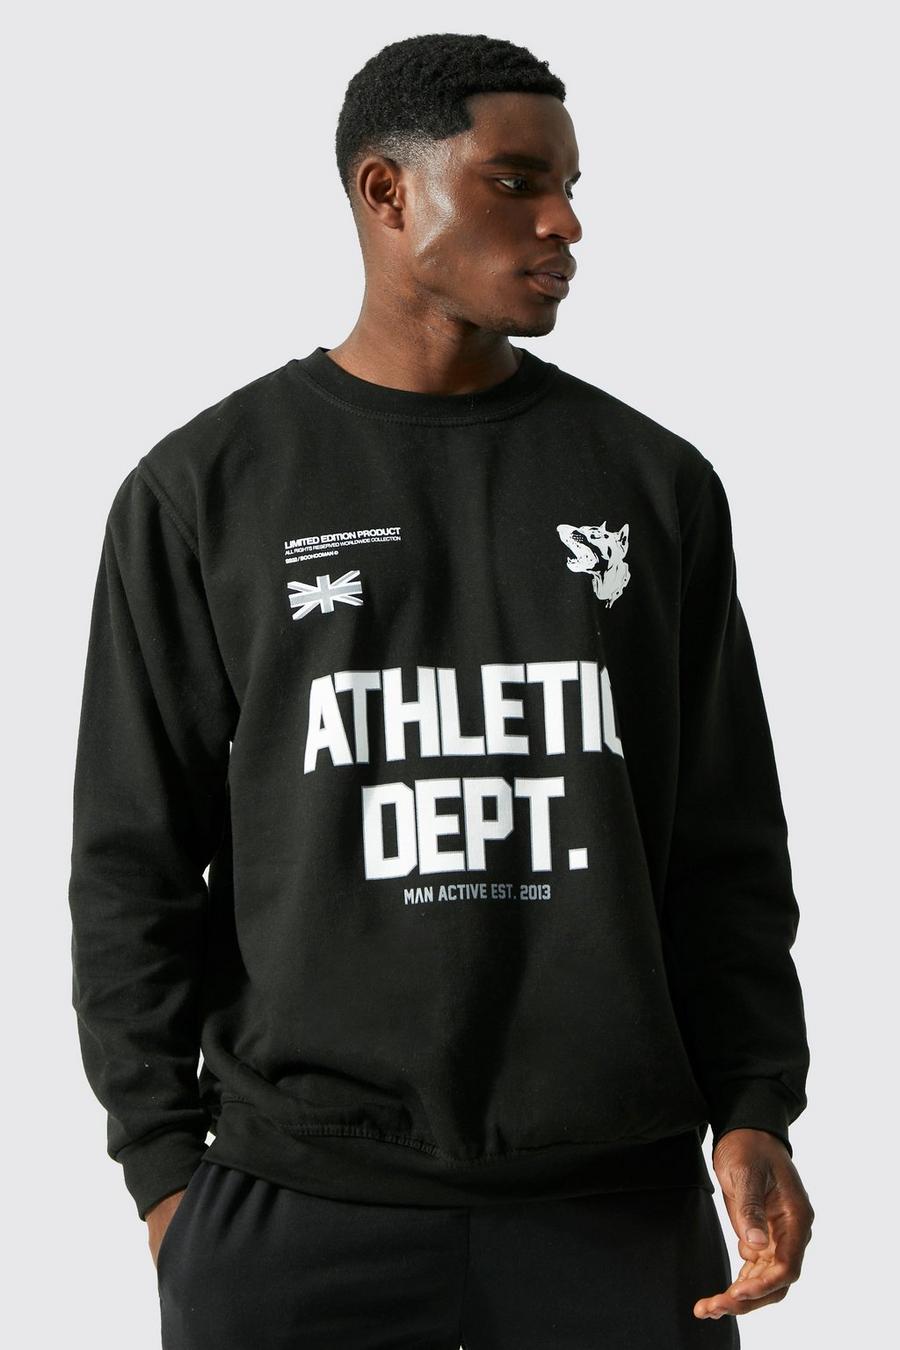 Black svart Man Active Oversized Athletic Dept. Sweater